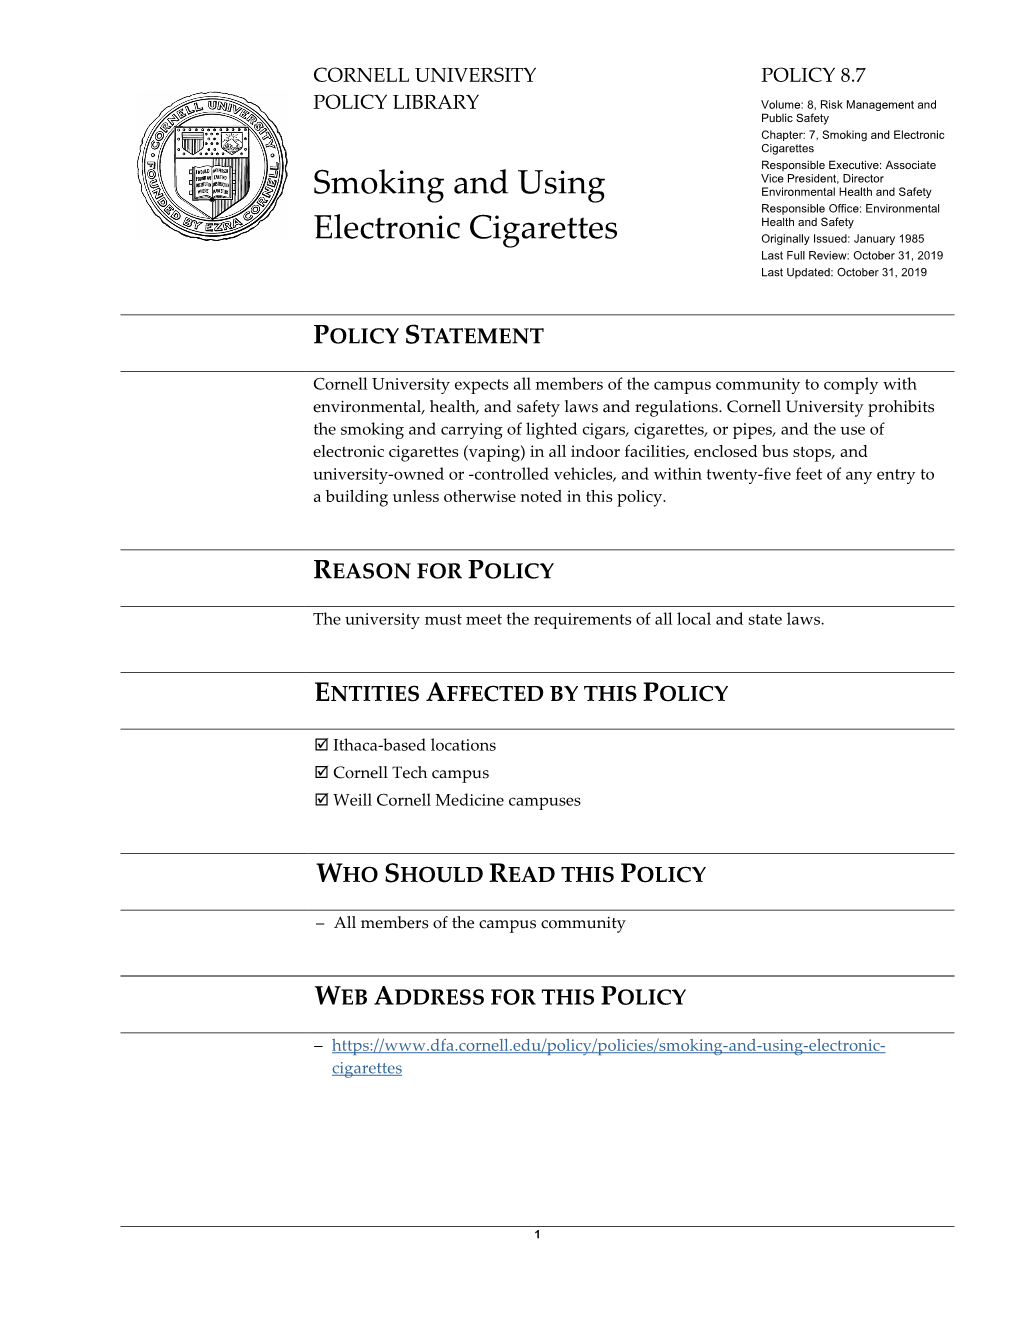 University Policy 8.7, Smoking And